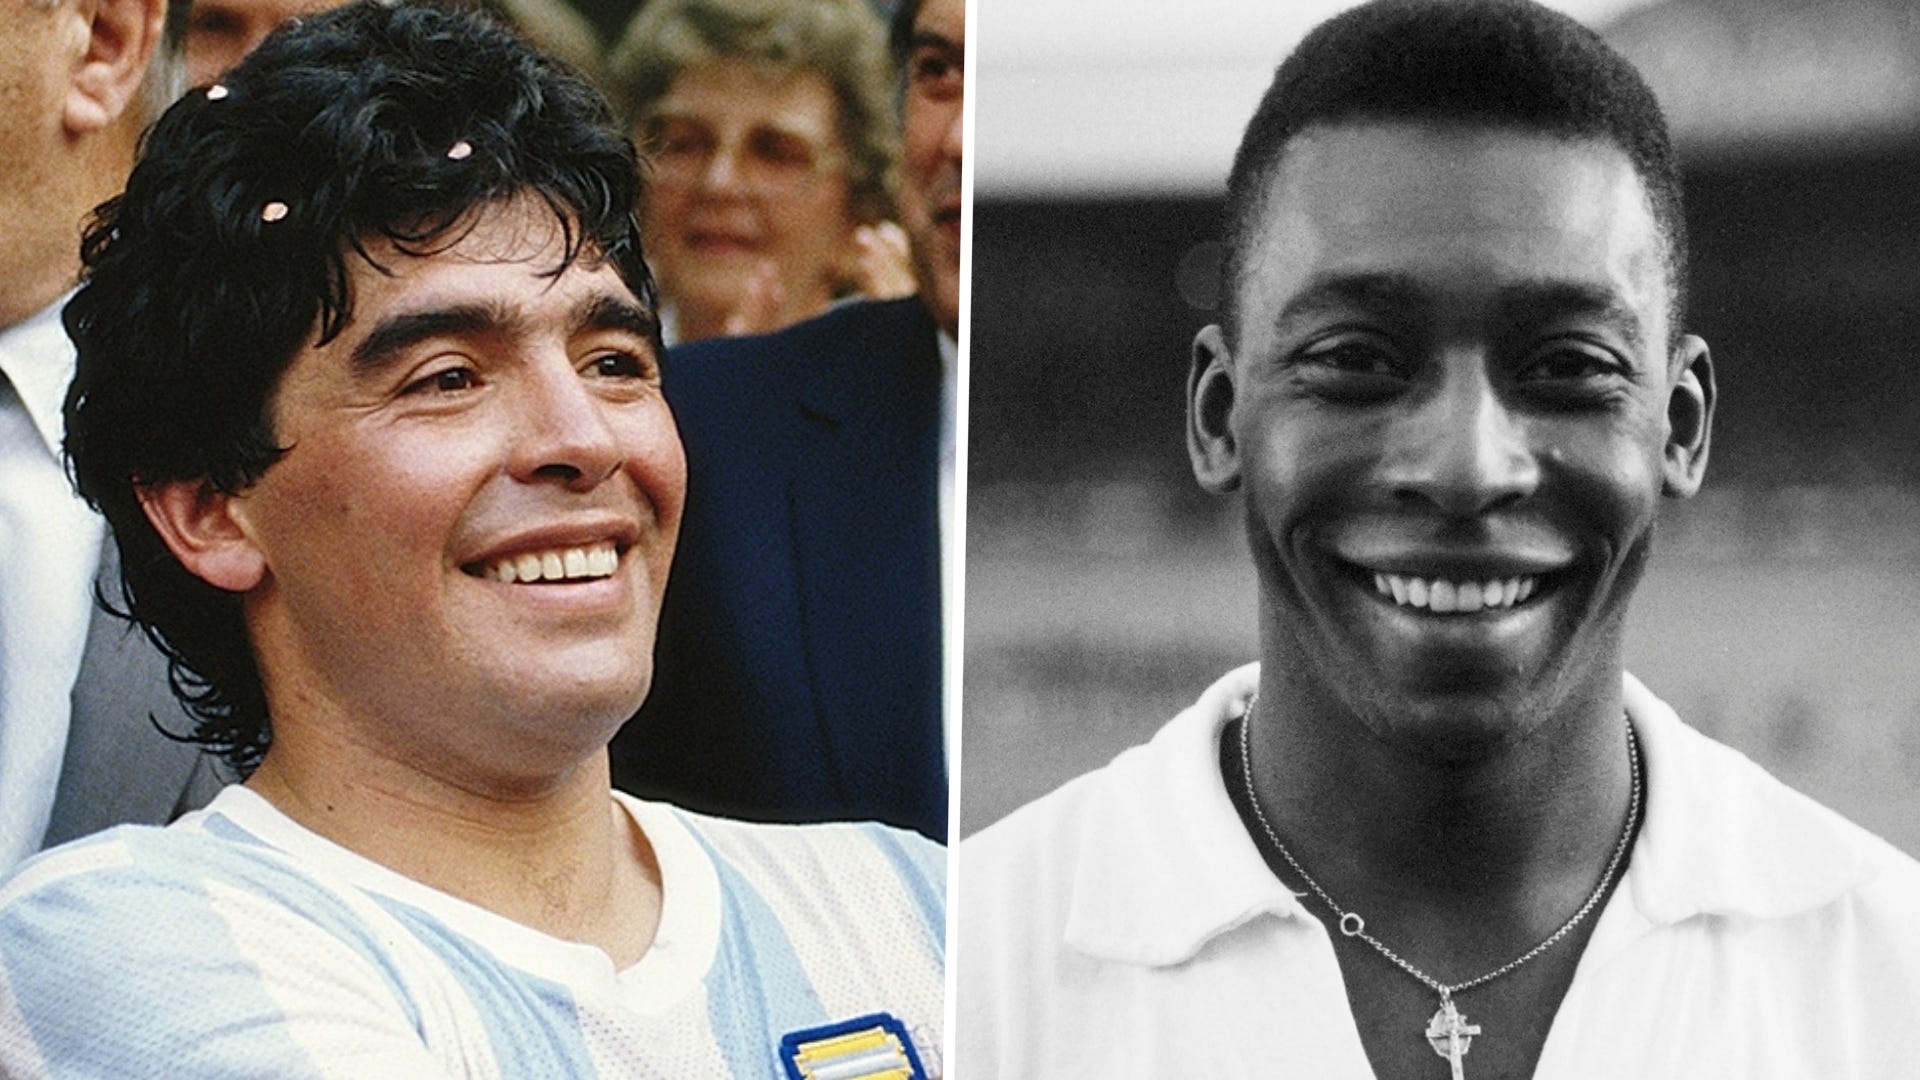 Lexica - Pele and Maradona in Heaven